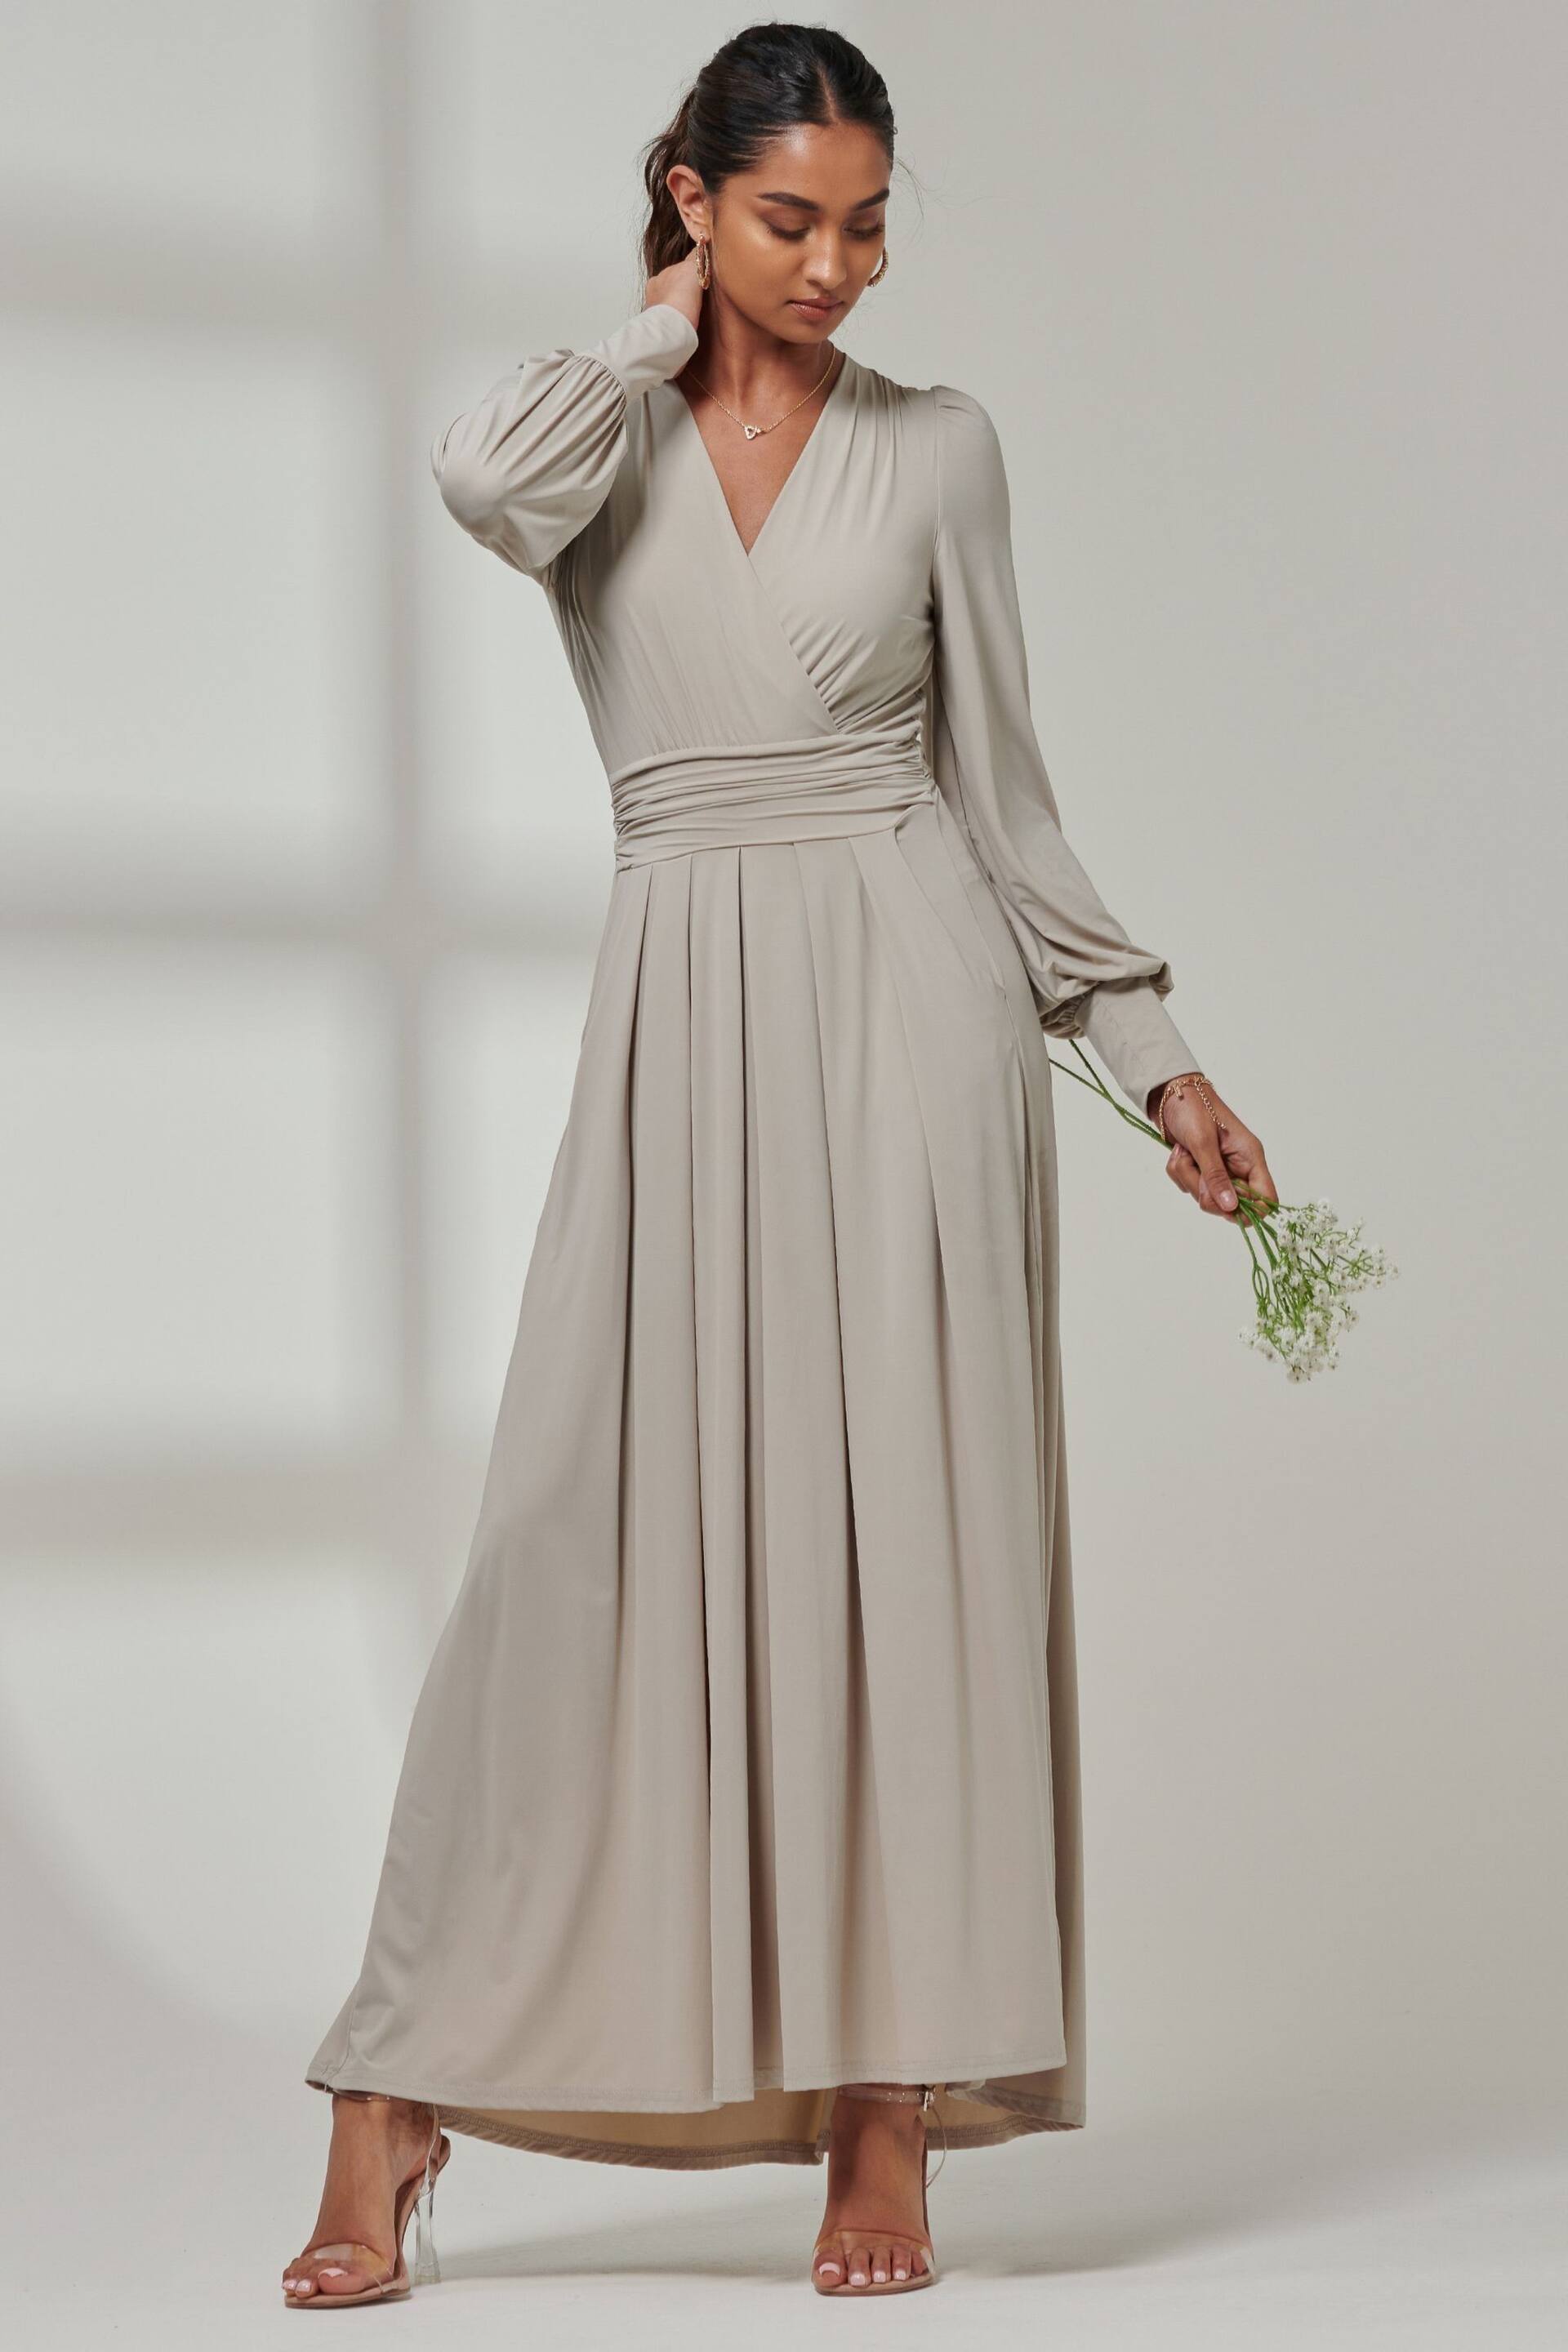 Jolie Moi Grey Giulia Long Sleeve Maxi Dress - Image 4 of 5